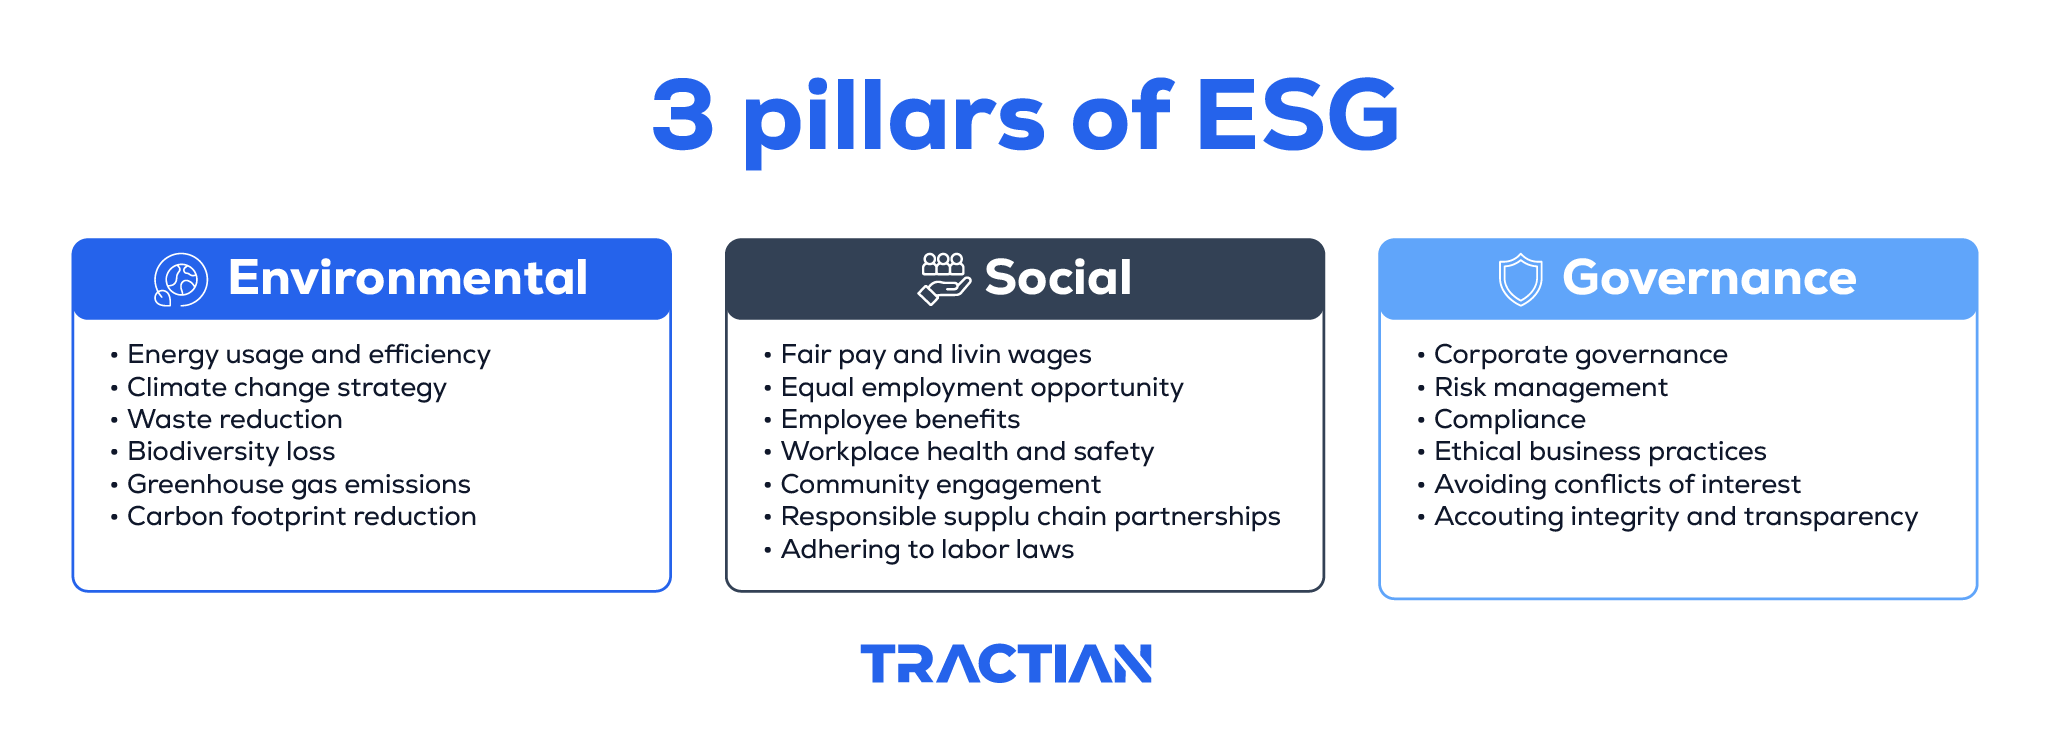 Three pillars of ESG